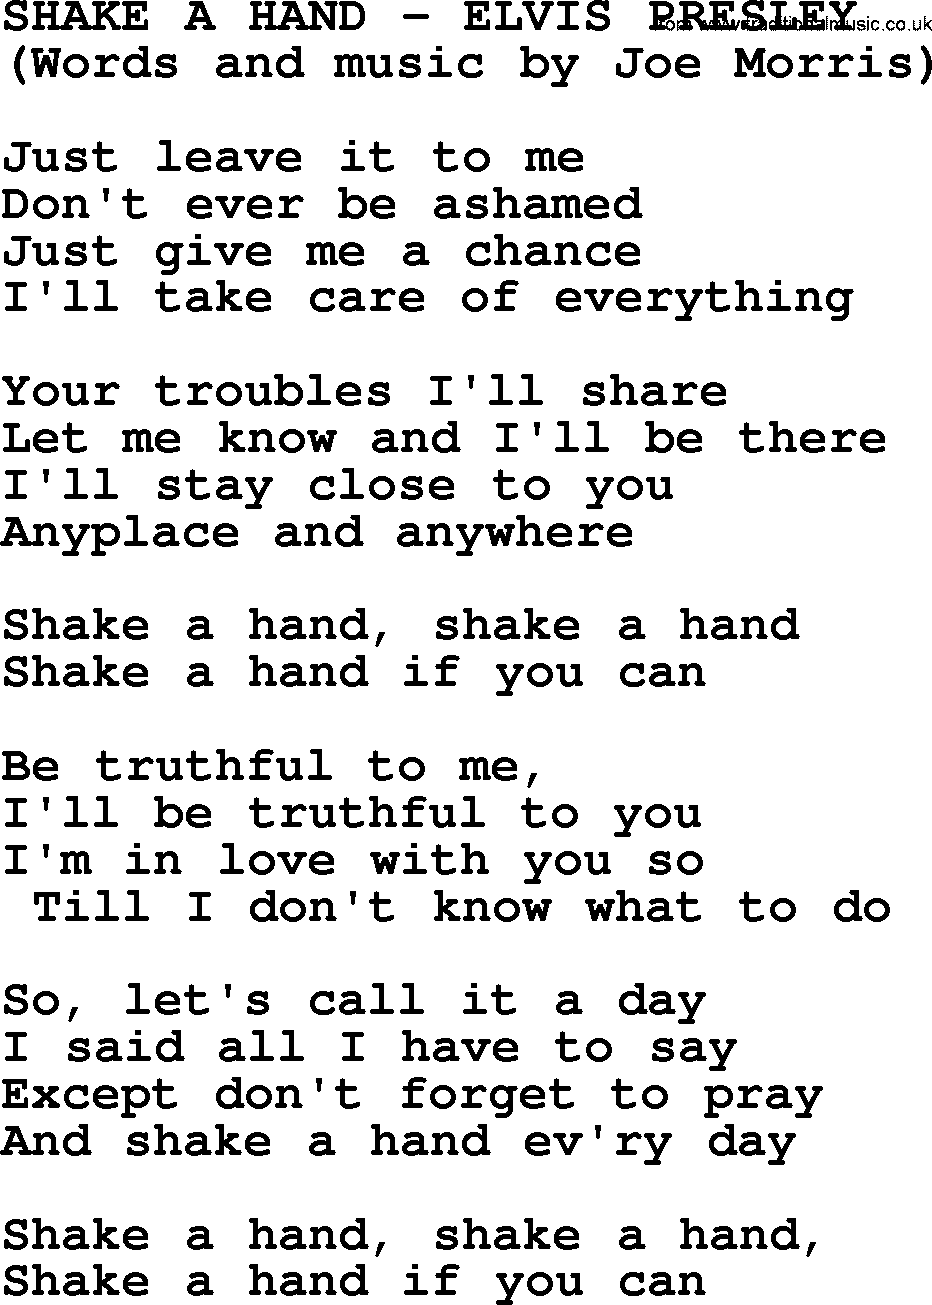 Elvis Presley song: Shake A Hand lyrics